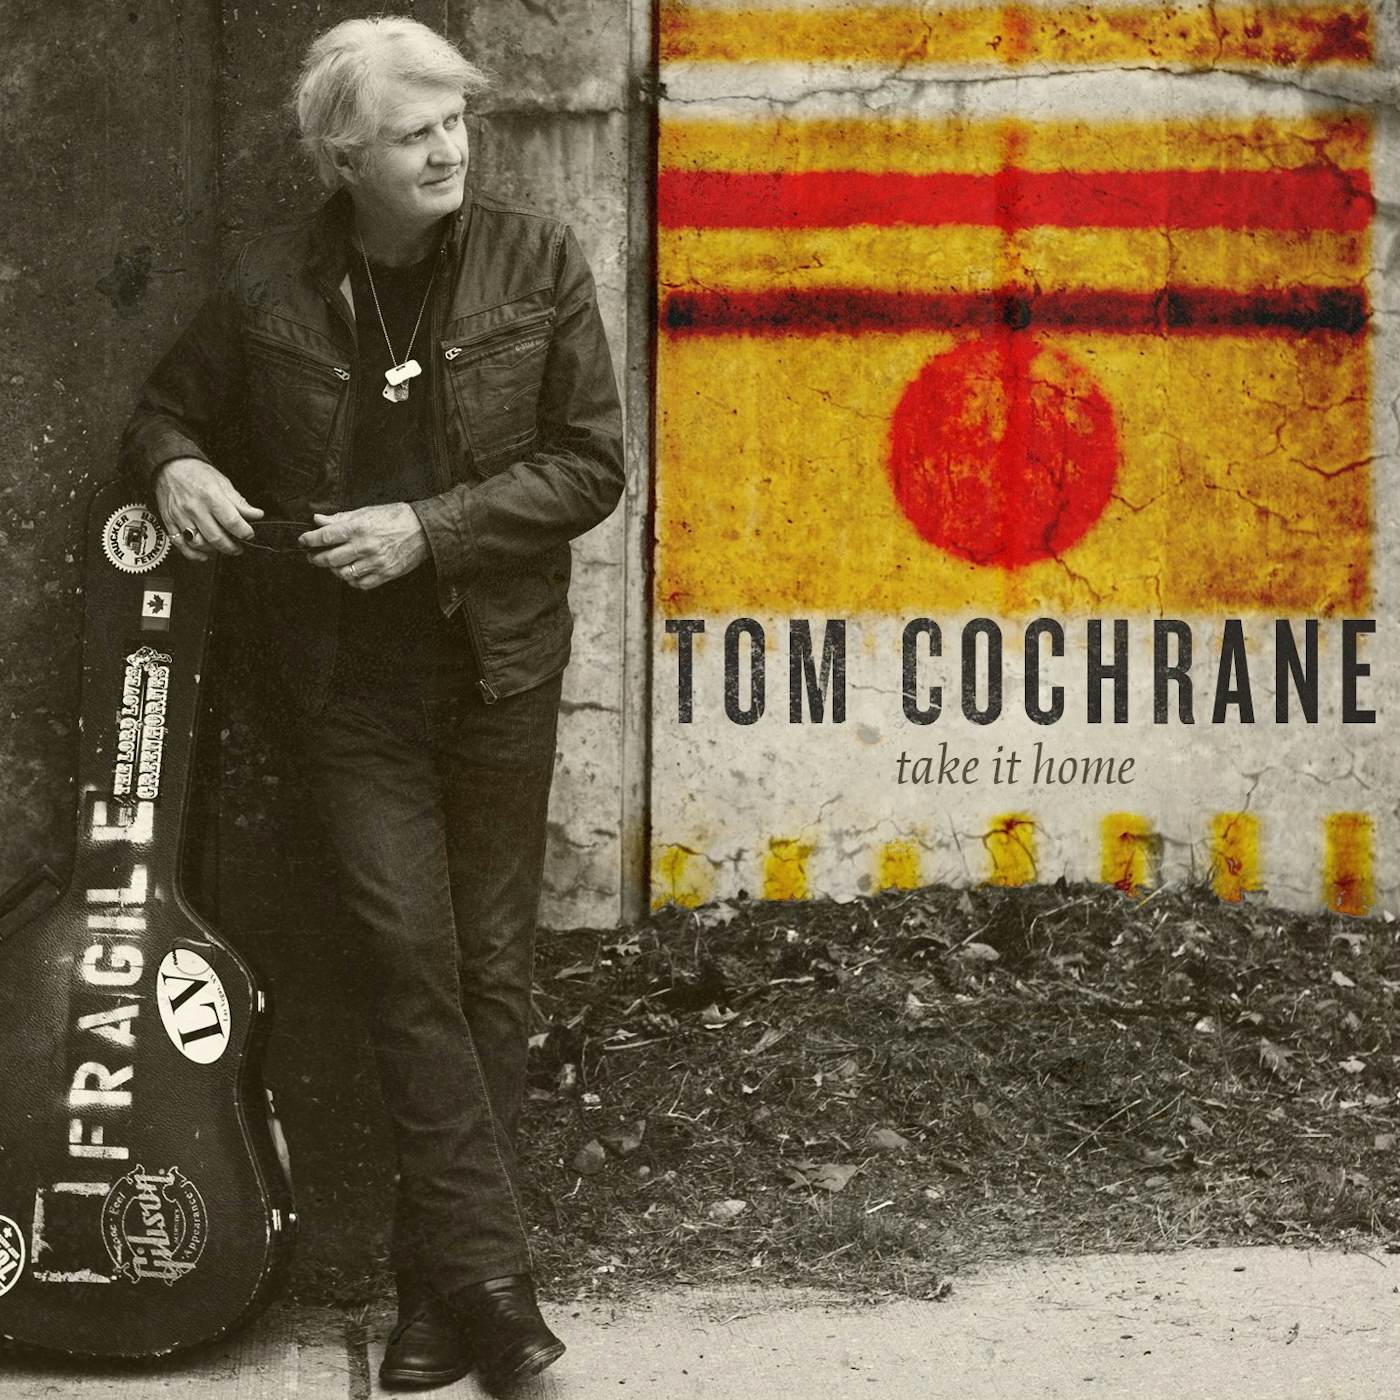 Tom Cochrane TAKE IT HOME CD